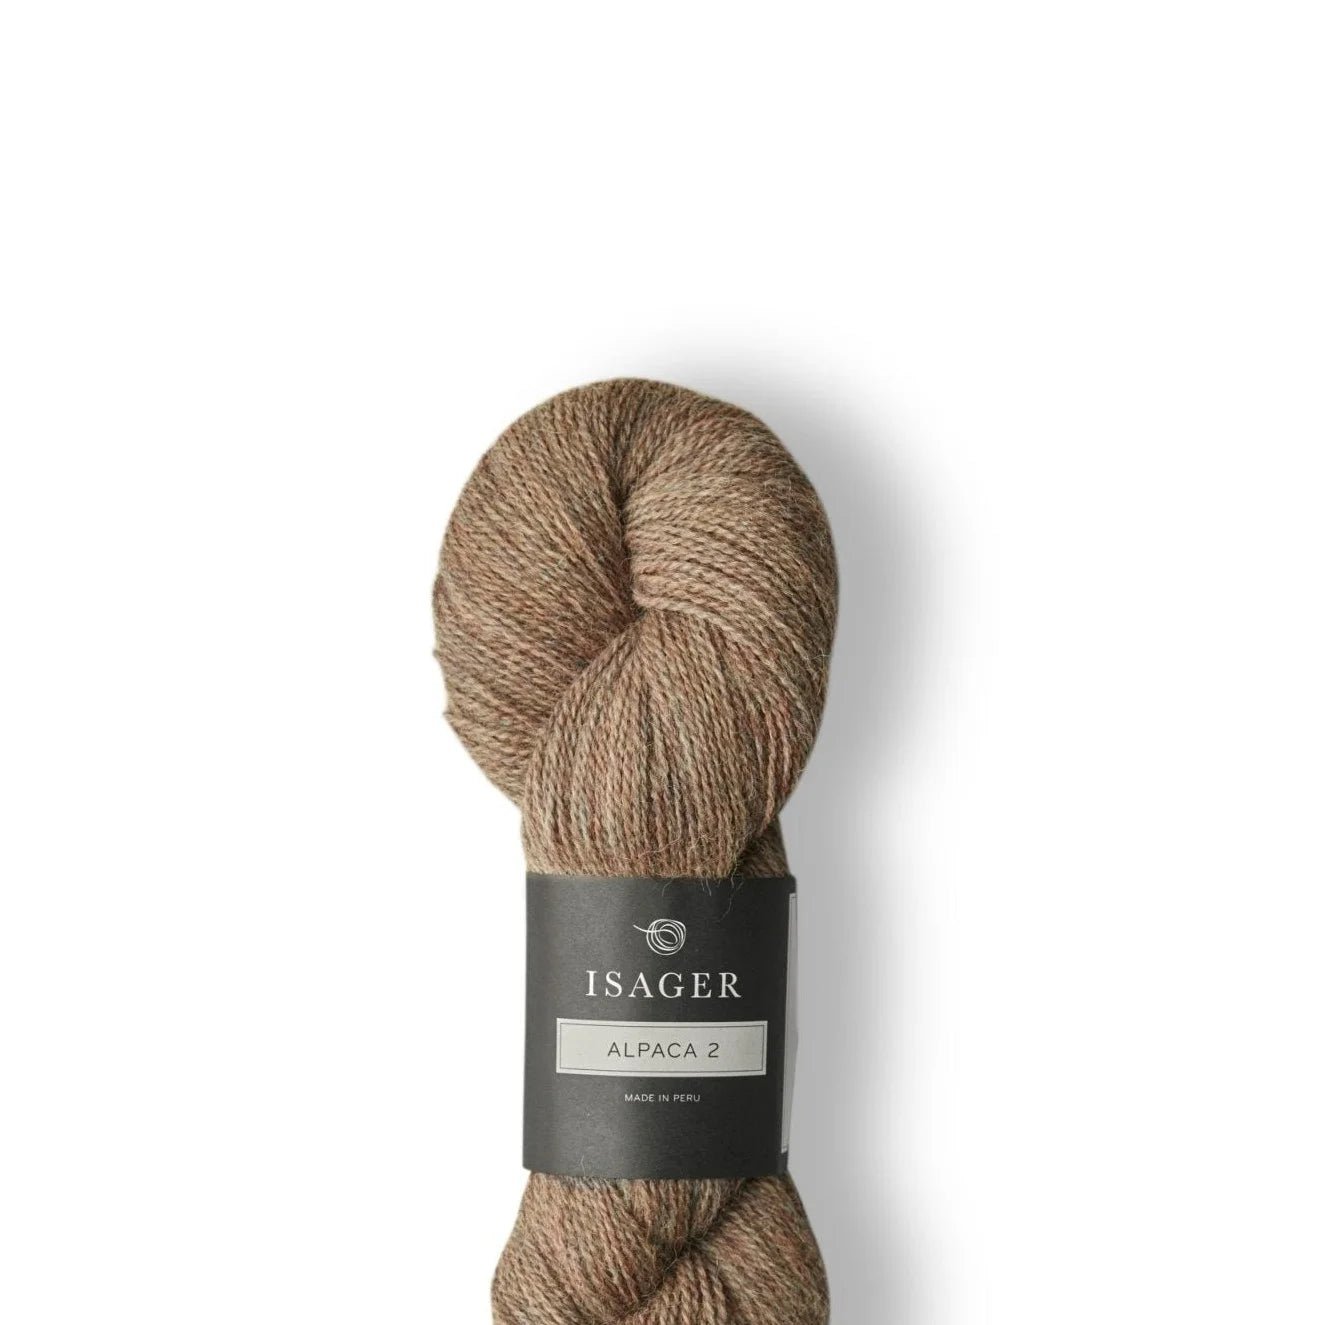 Isager Alpaca 2 - Sky - 4 Ply - Alpaca - The Little Yarn Store